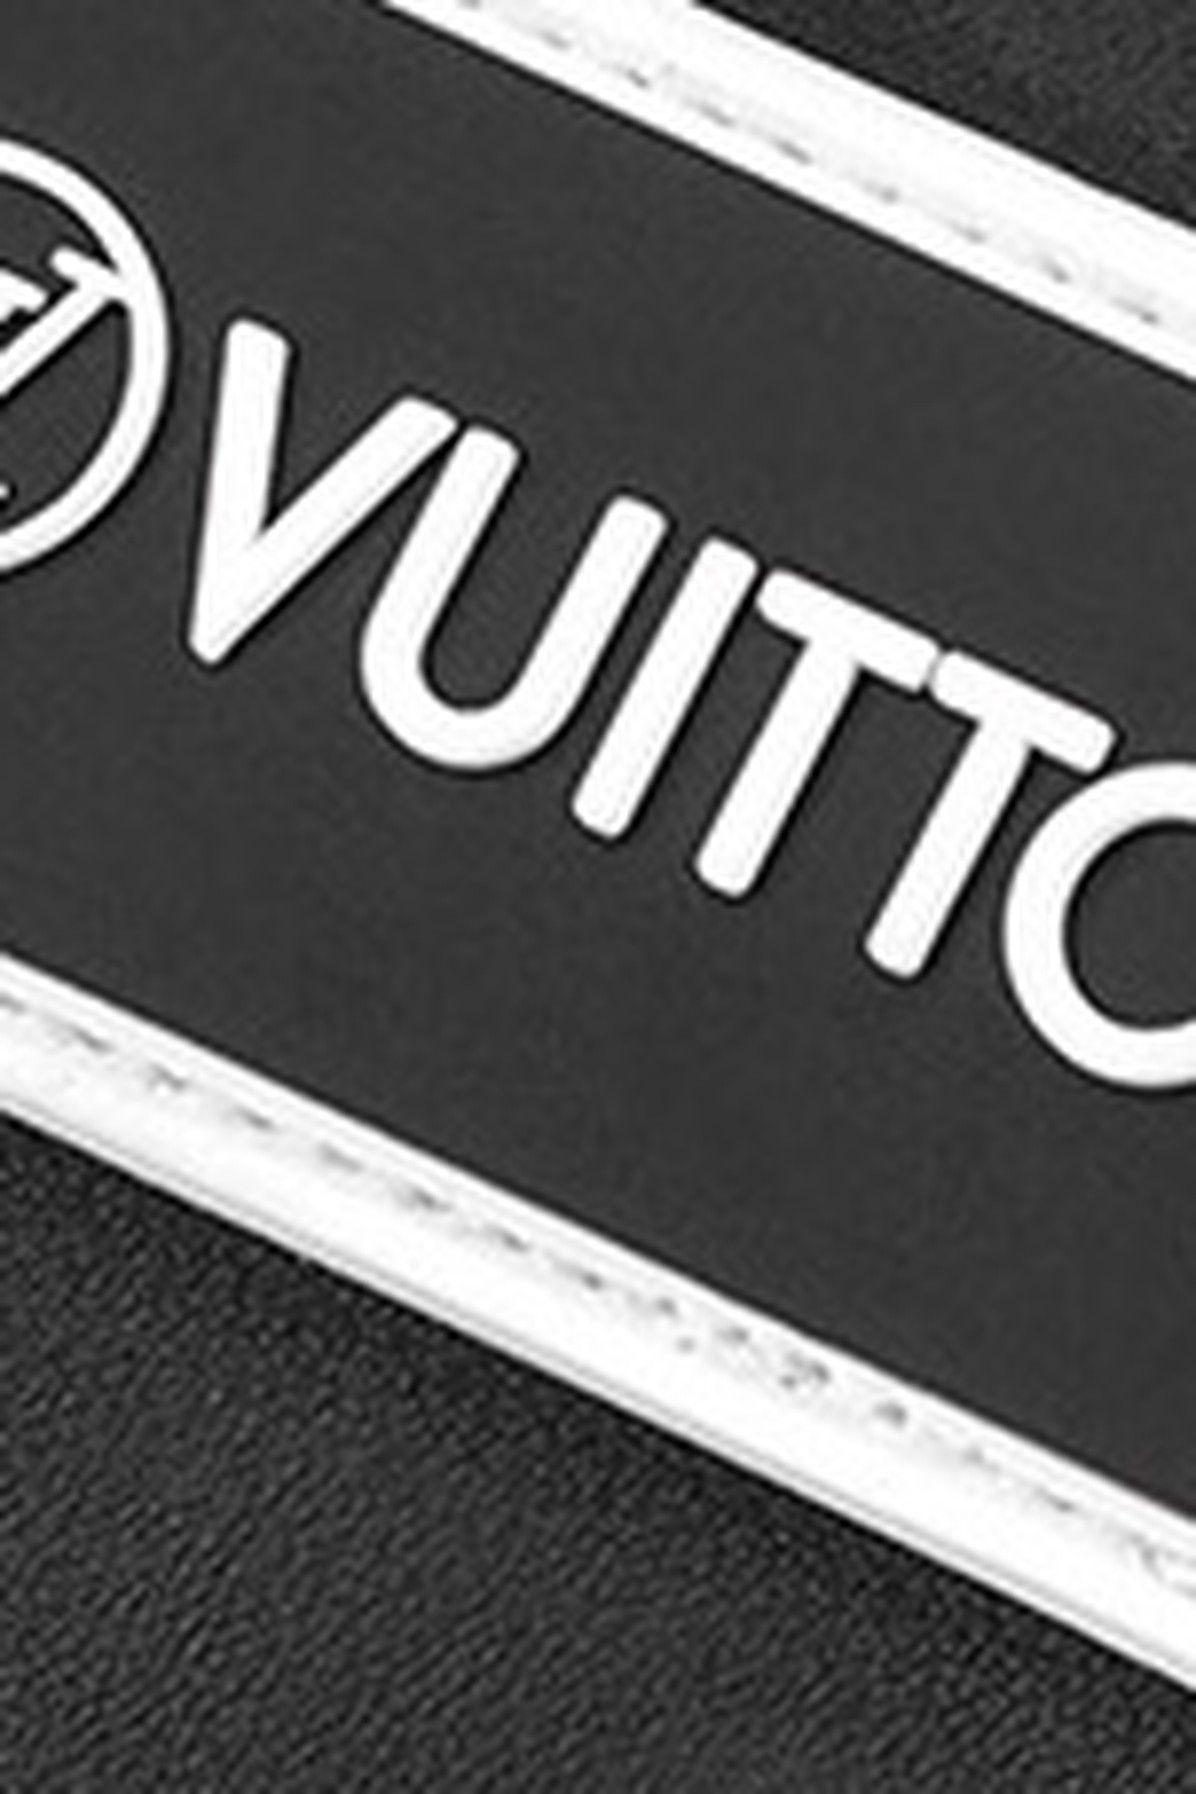 Louis Vuitton LV Sunset Comfort Flat Sandal BLACK. Size 37.0